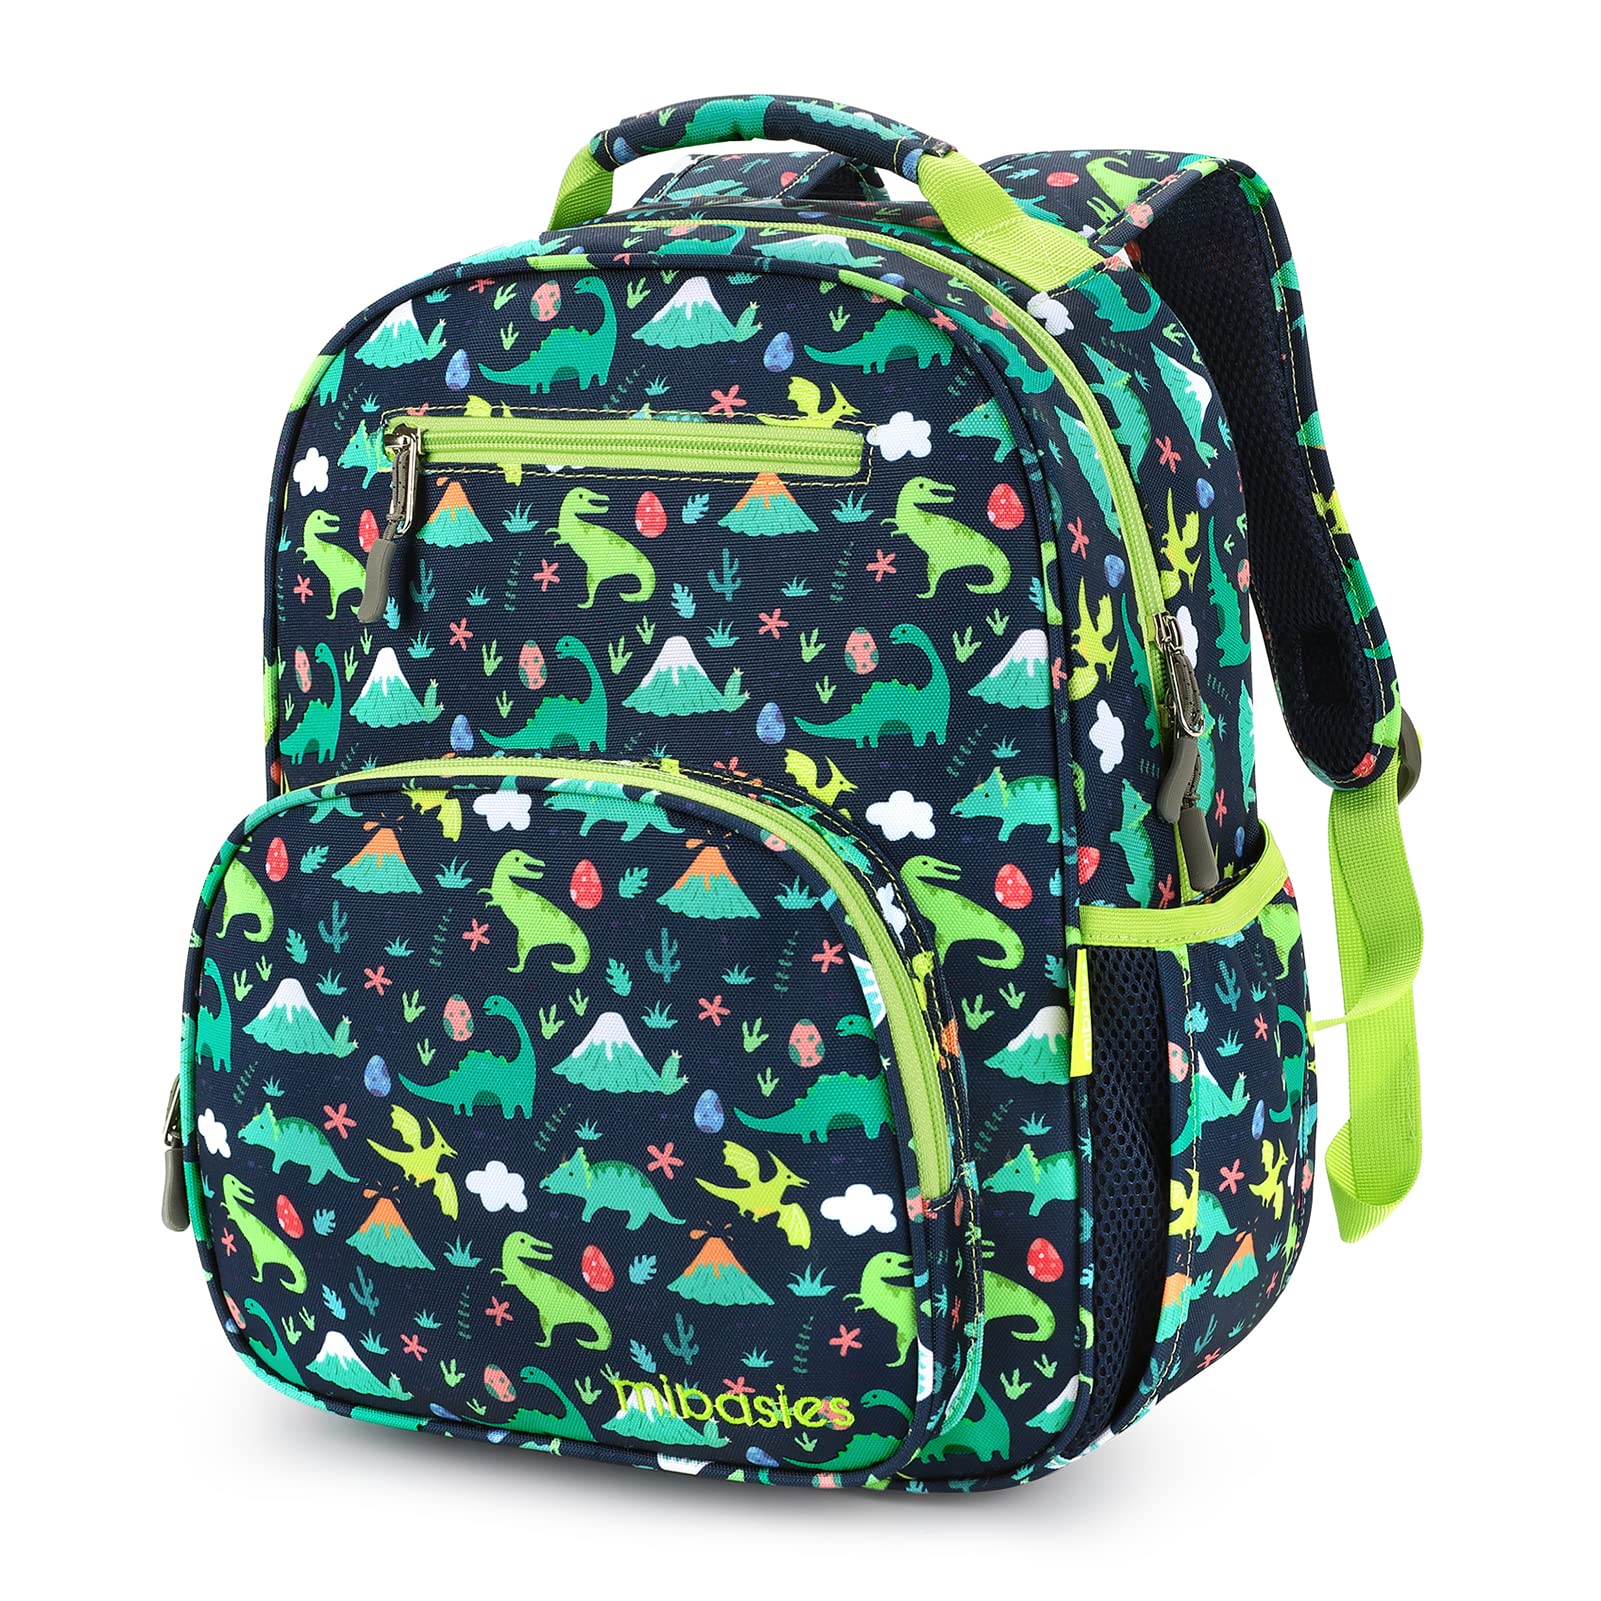 Mr. Dino Backpack schoolbag Mibasies 14L Dinosaur Forest 